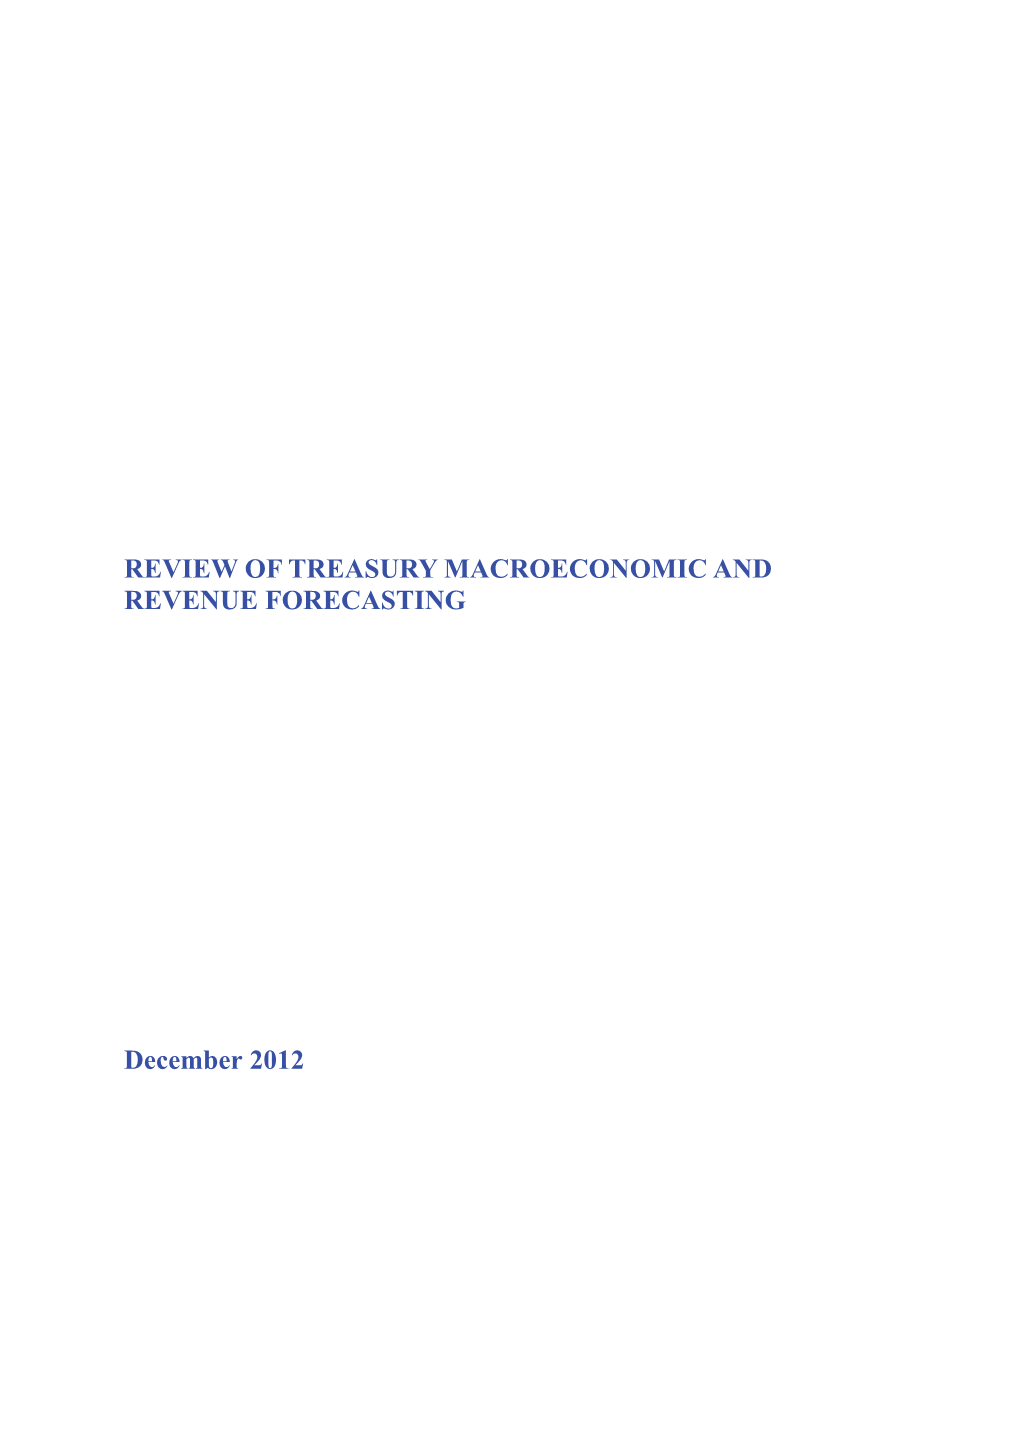 Review of Treasury Macroeconomic and Revenue Forecasting